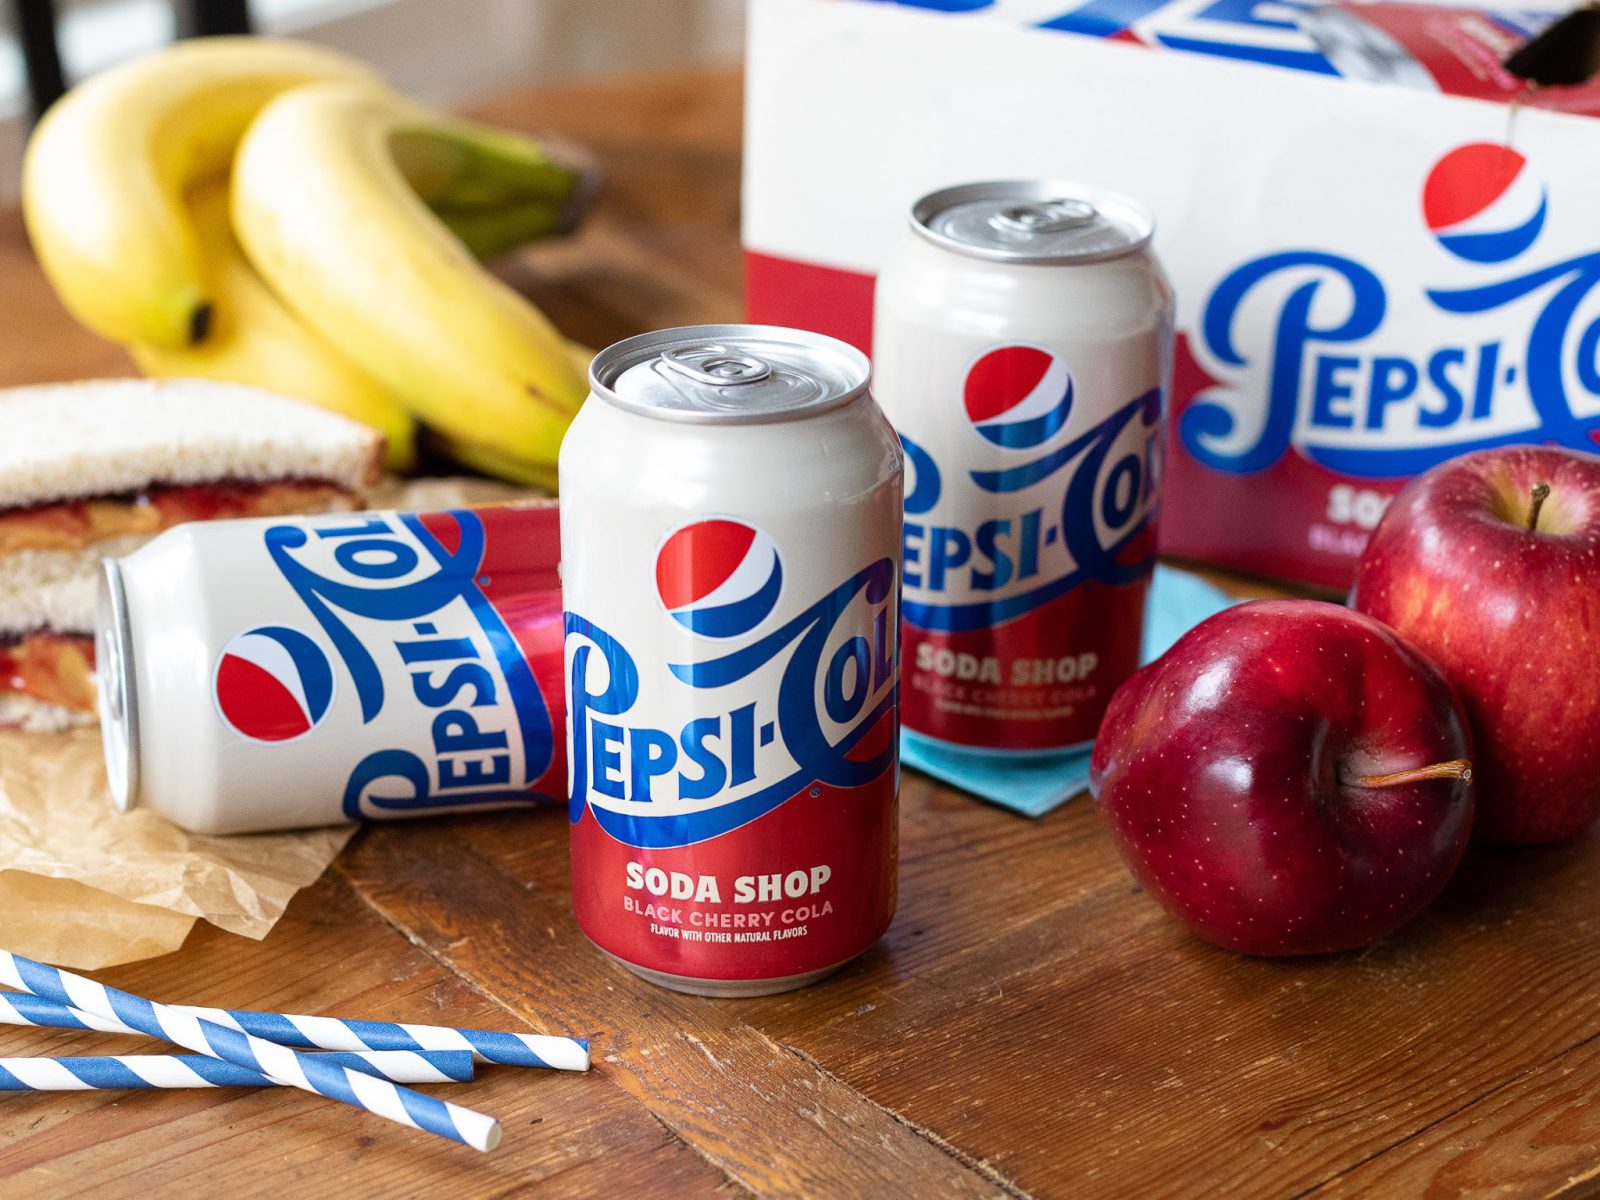 Get Pepsi Soda Shop 12-Packs For Just $3.17 At Kroger (Regular Price $7.99) – Plus Cheap Schweppes Ginger Ale